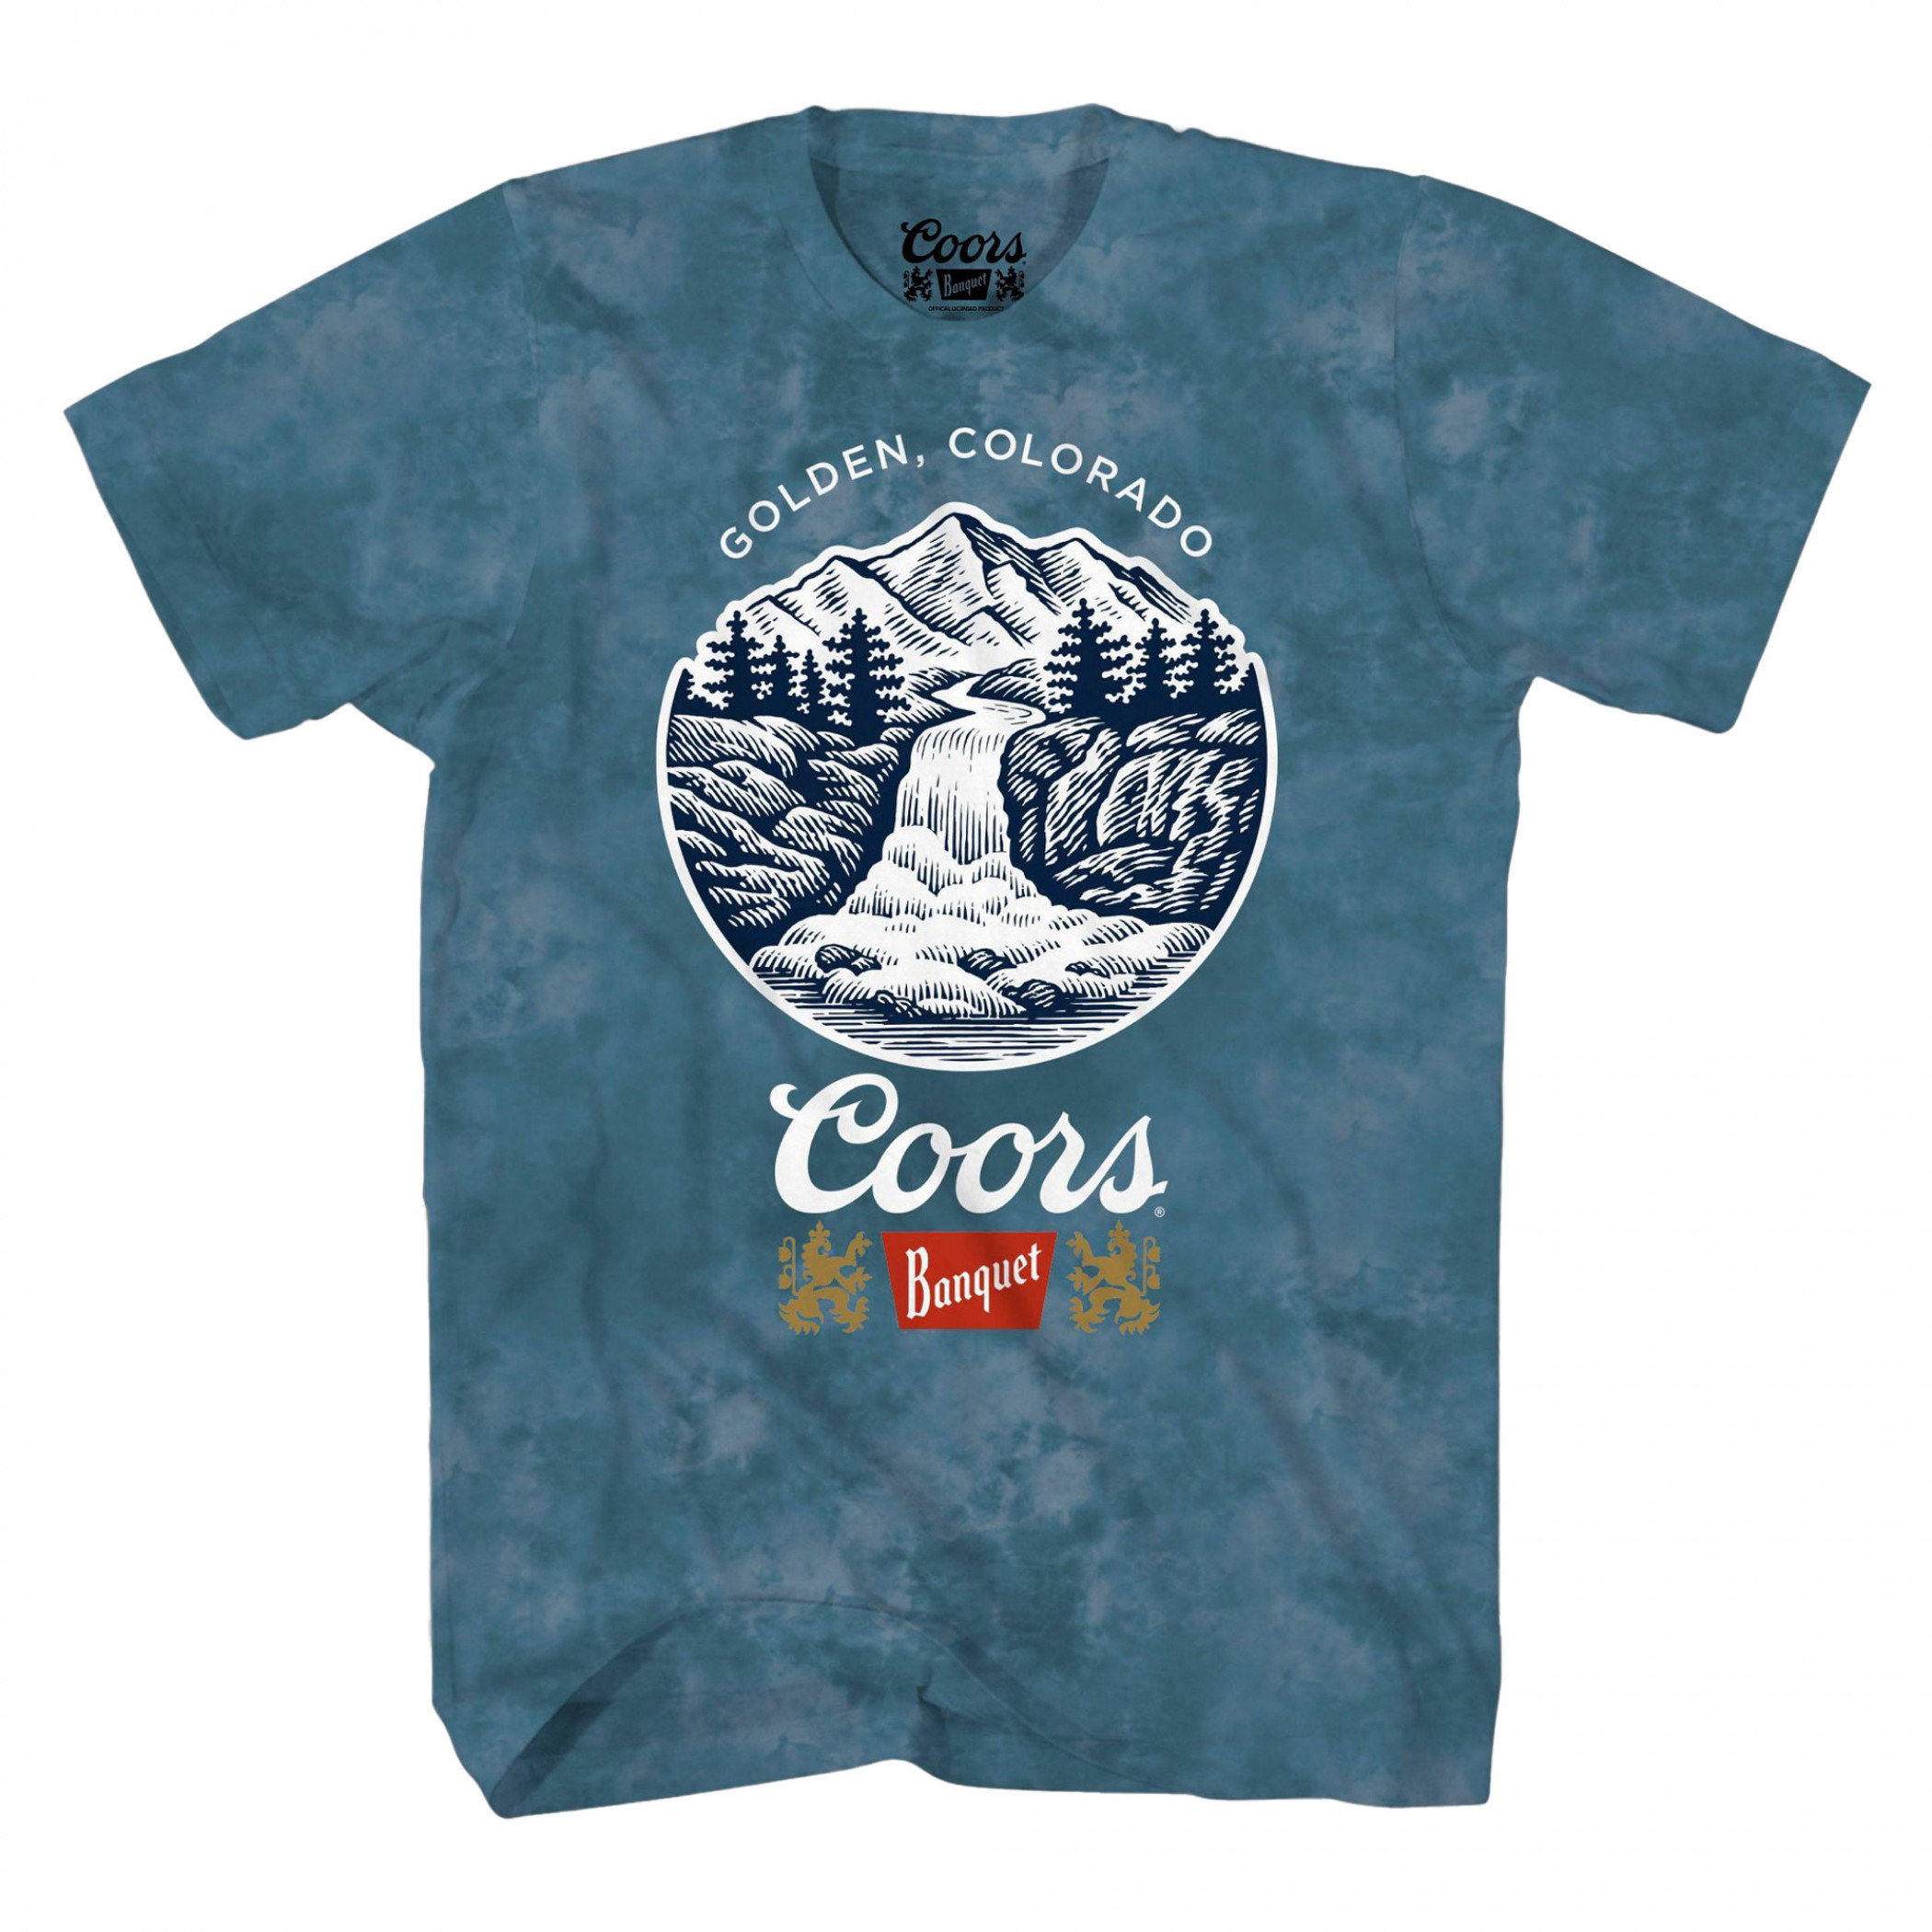 Coors Banquet Golden Colorado Logo Tie-Dye T-Shirt